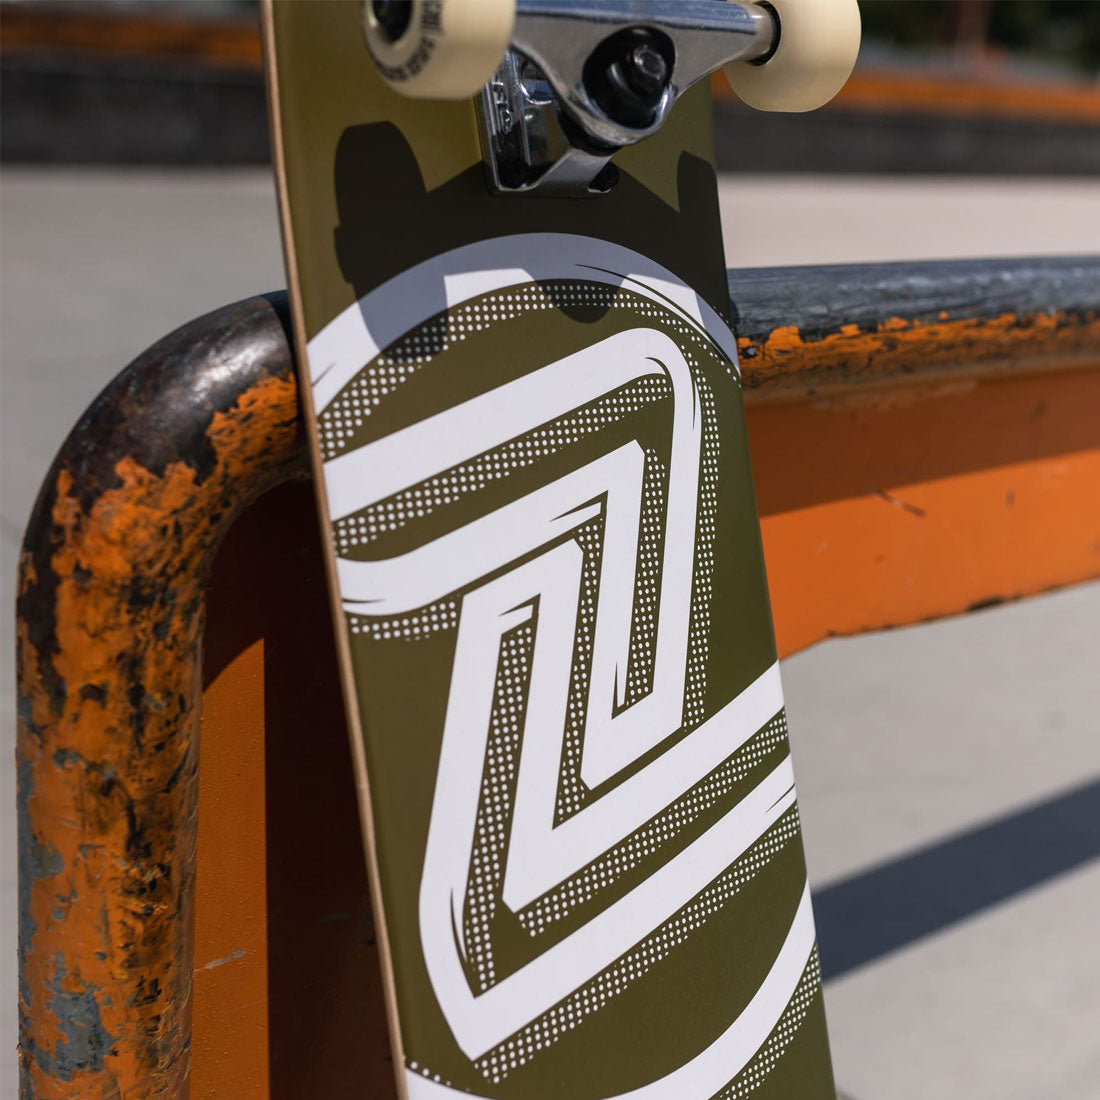 Z-Flex Logo 7.8 Complete - Gold Skateboard Completes Modern Street